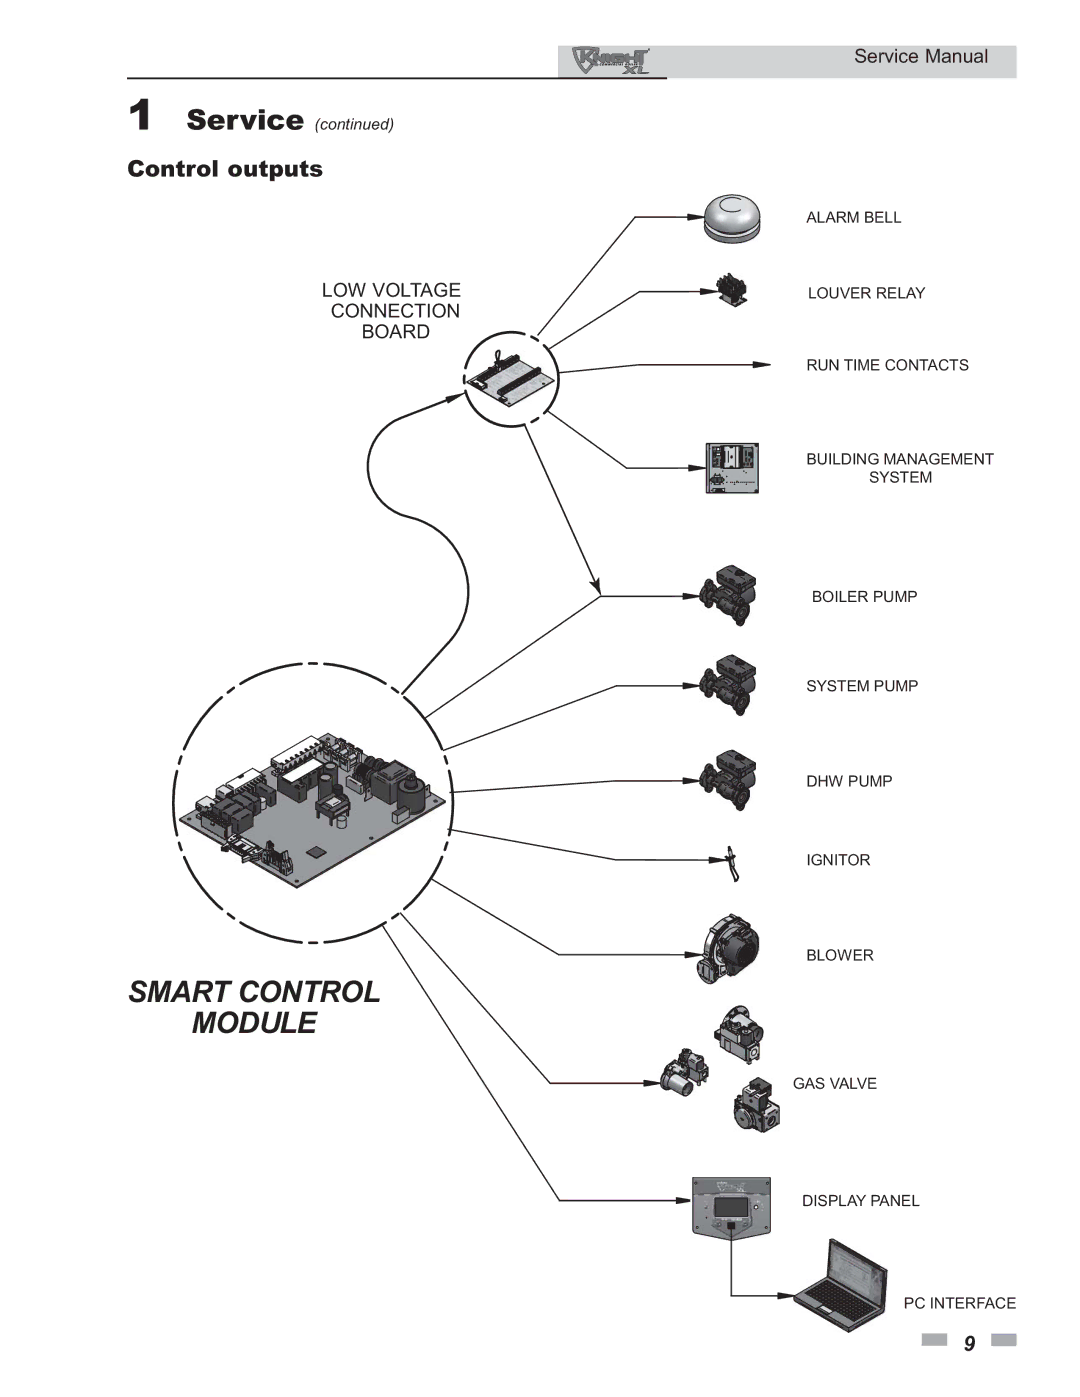 Lochinvar 400 - 801 service manual Smart Control Module, Control outputs 